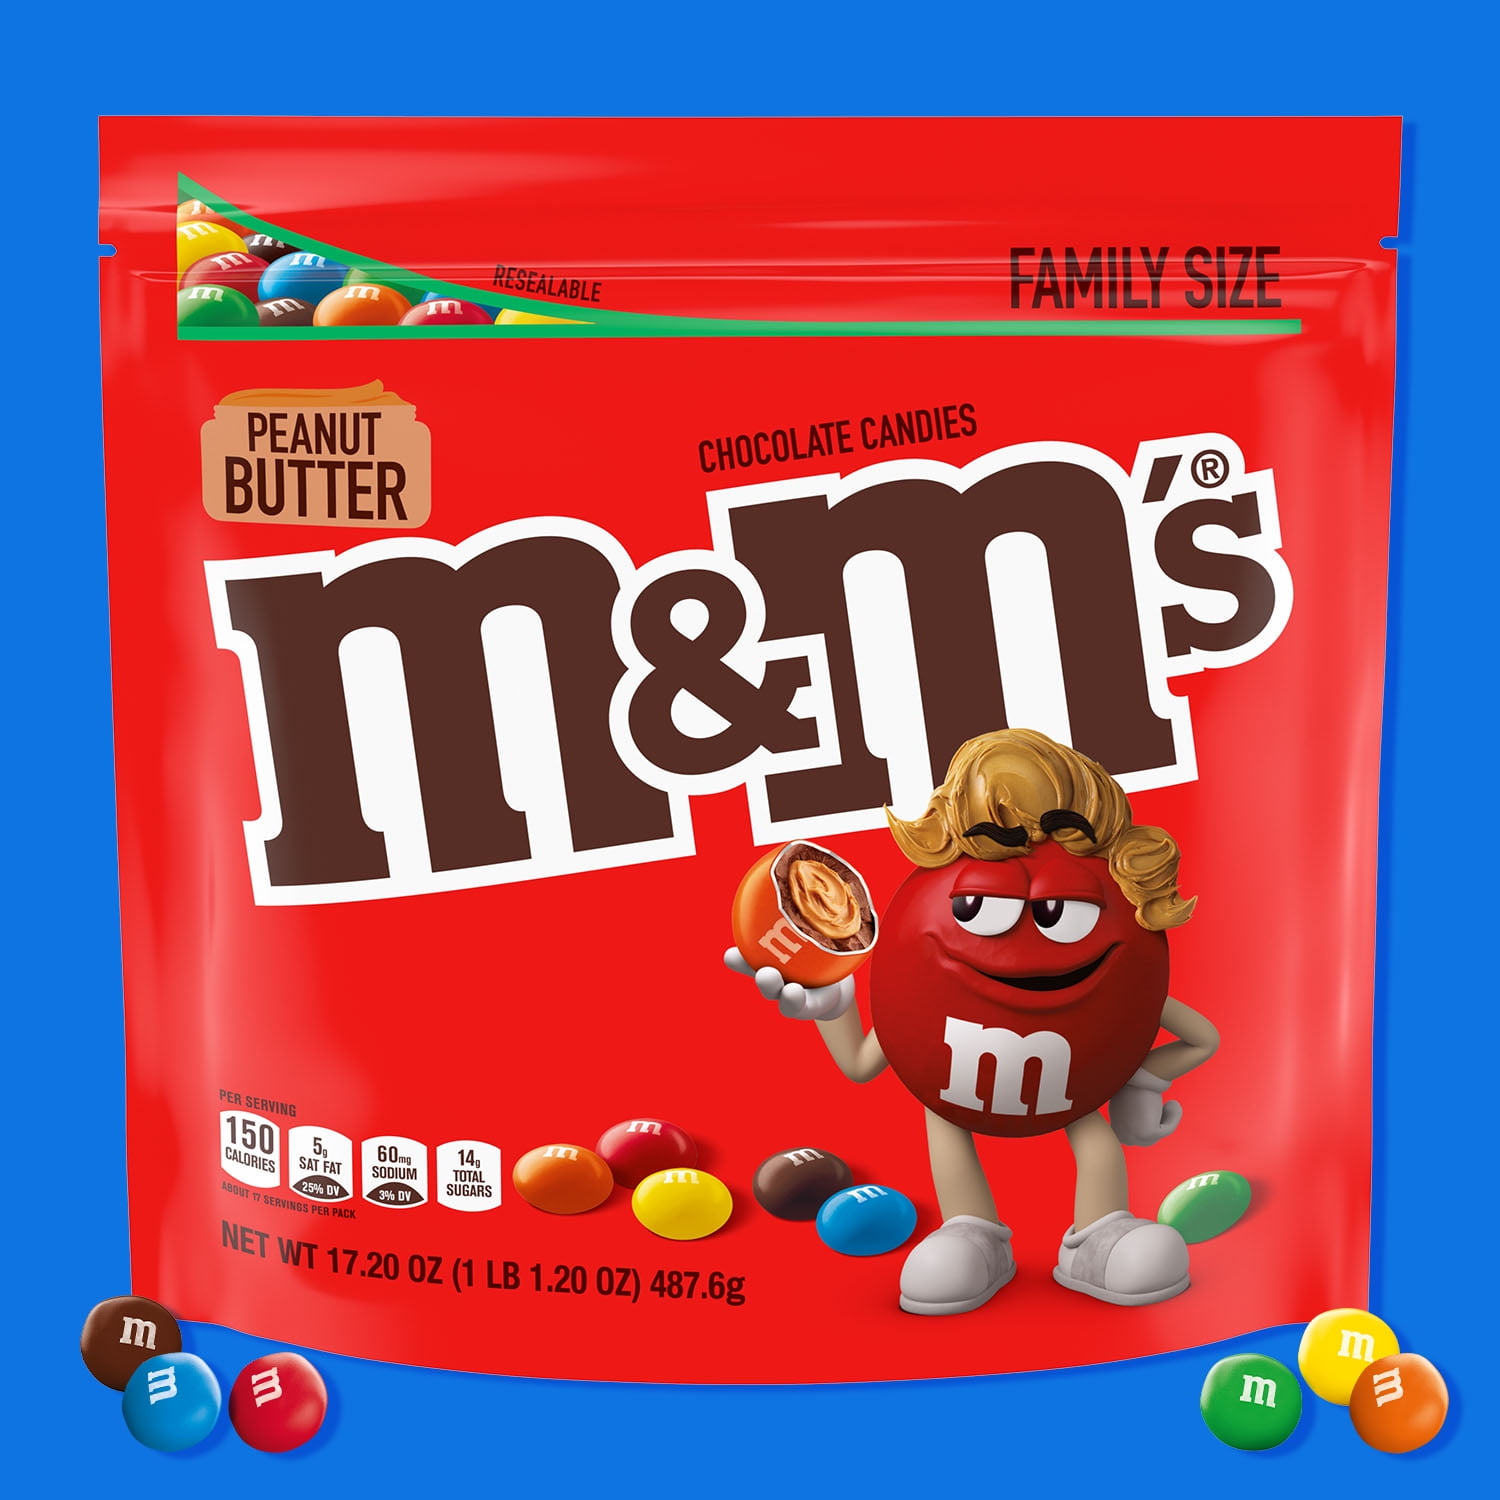 Mint Dark Chocolate M&M's Candy Packs: 24-Piece Box